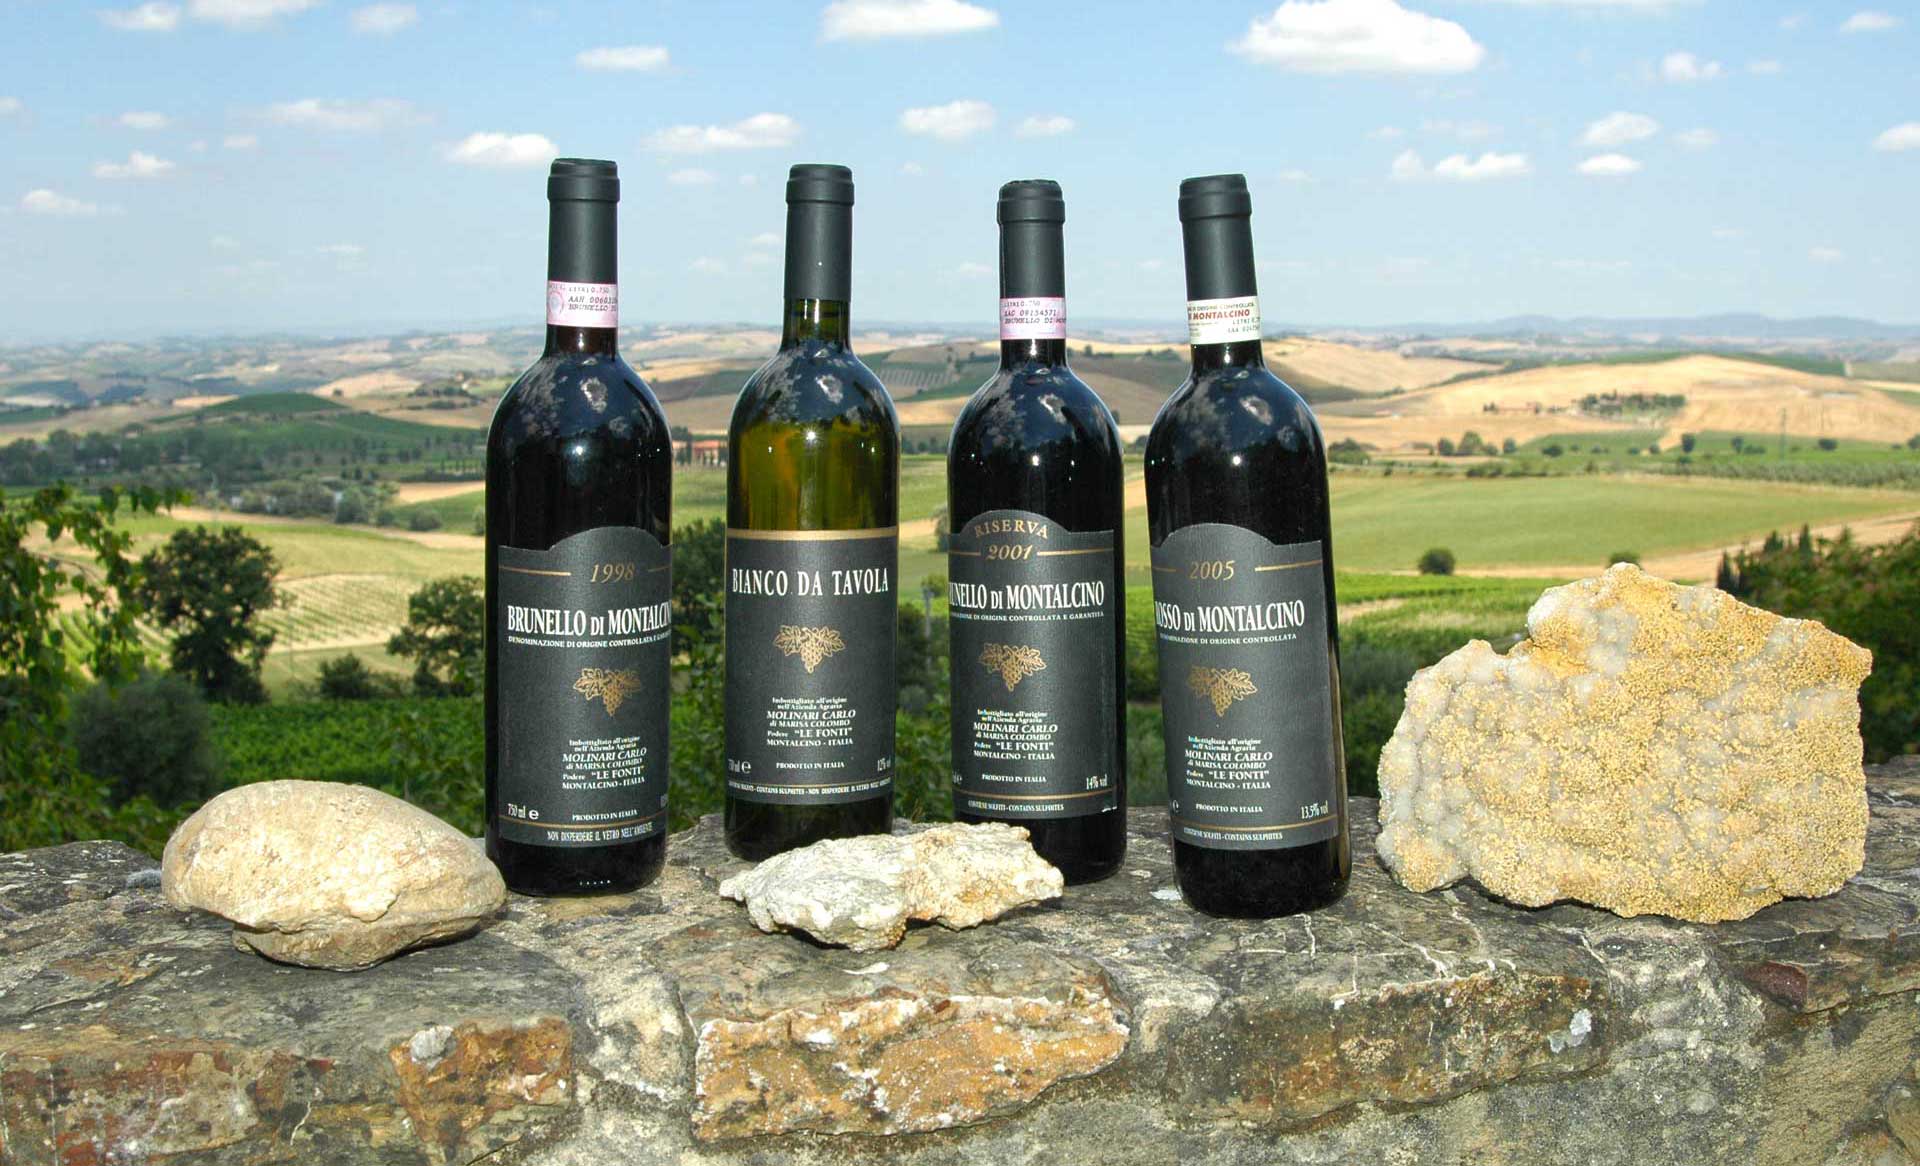 Vins ... Le goût unique de Brunello di Montalcino